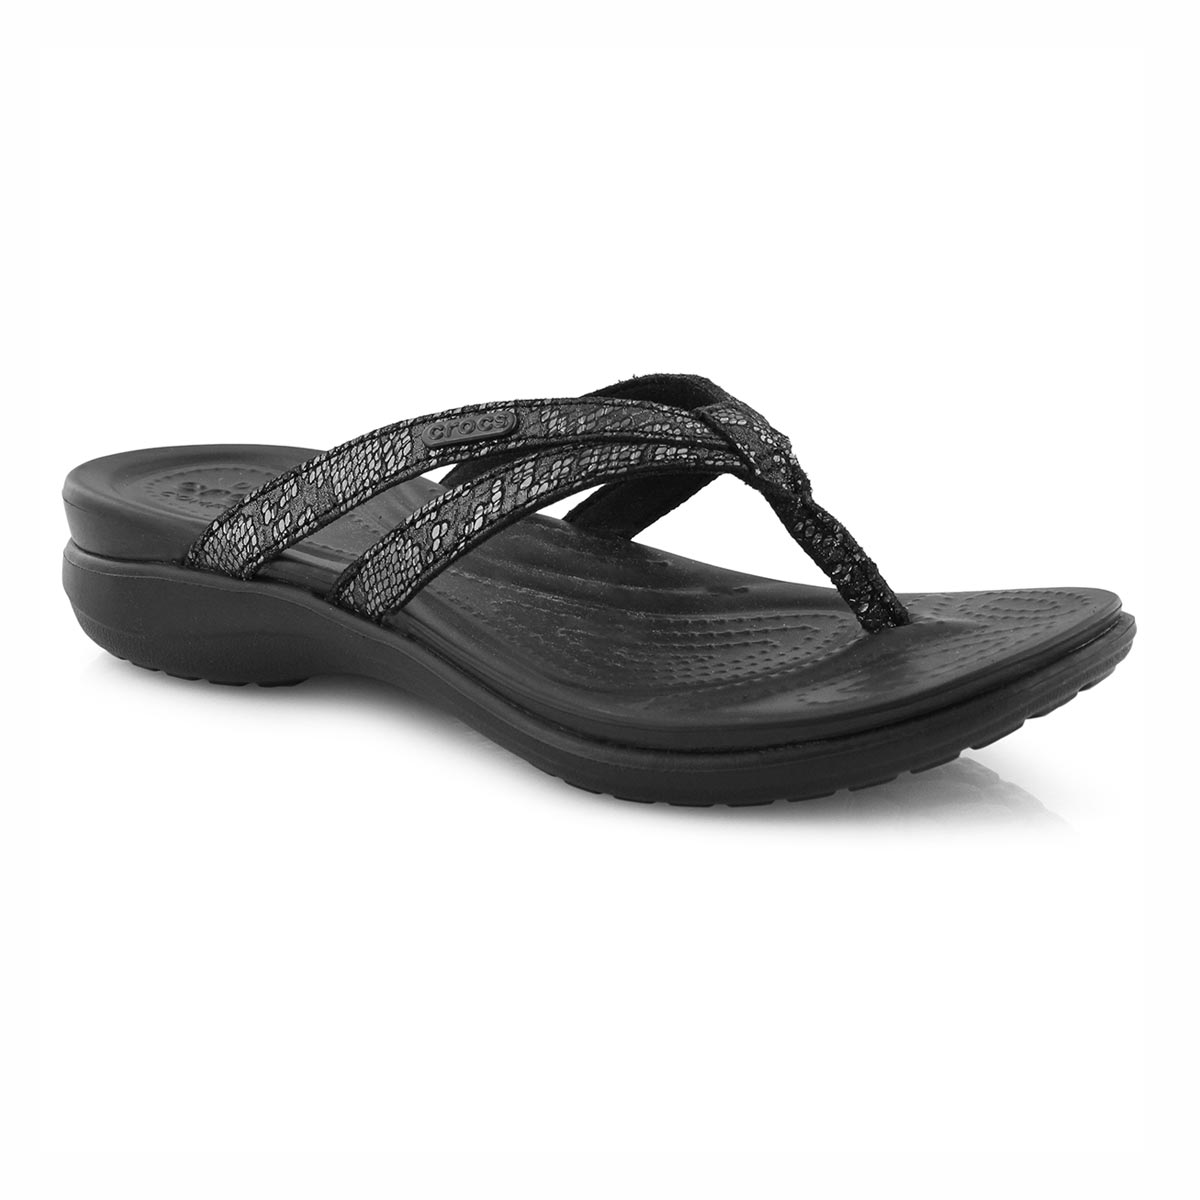 Crocs Women's Capri Strappy Thong Sandal - Bl | SoftMoc.com